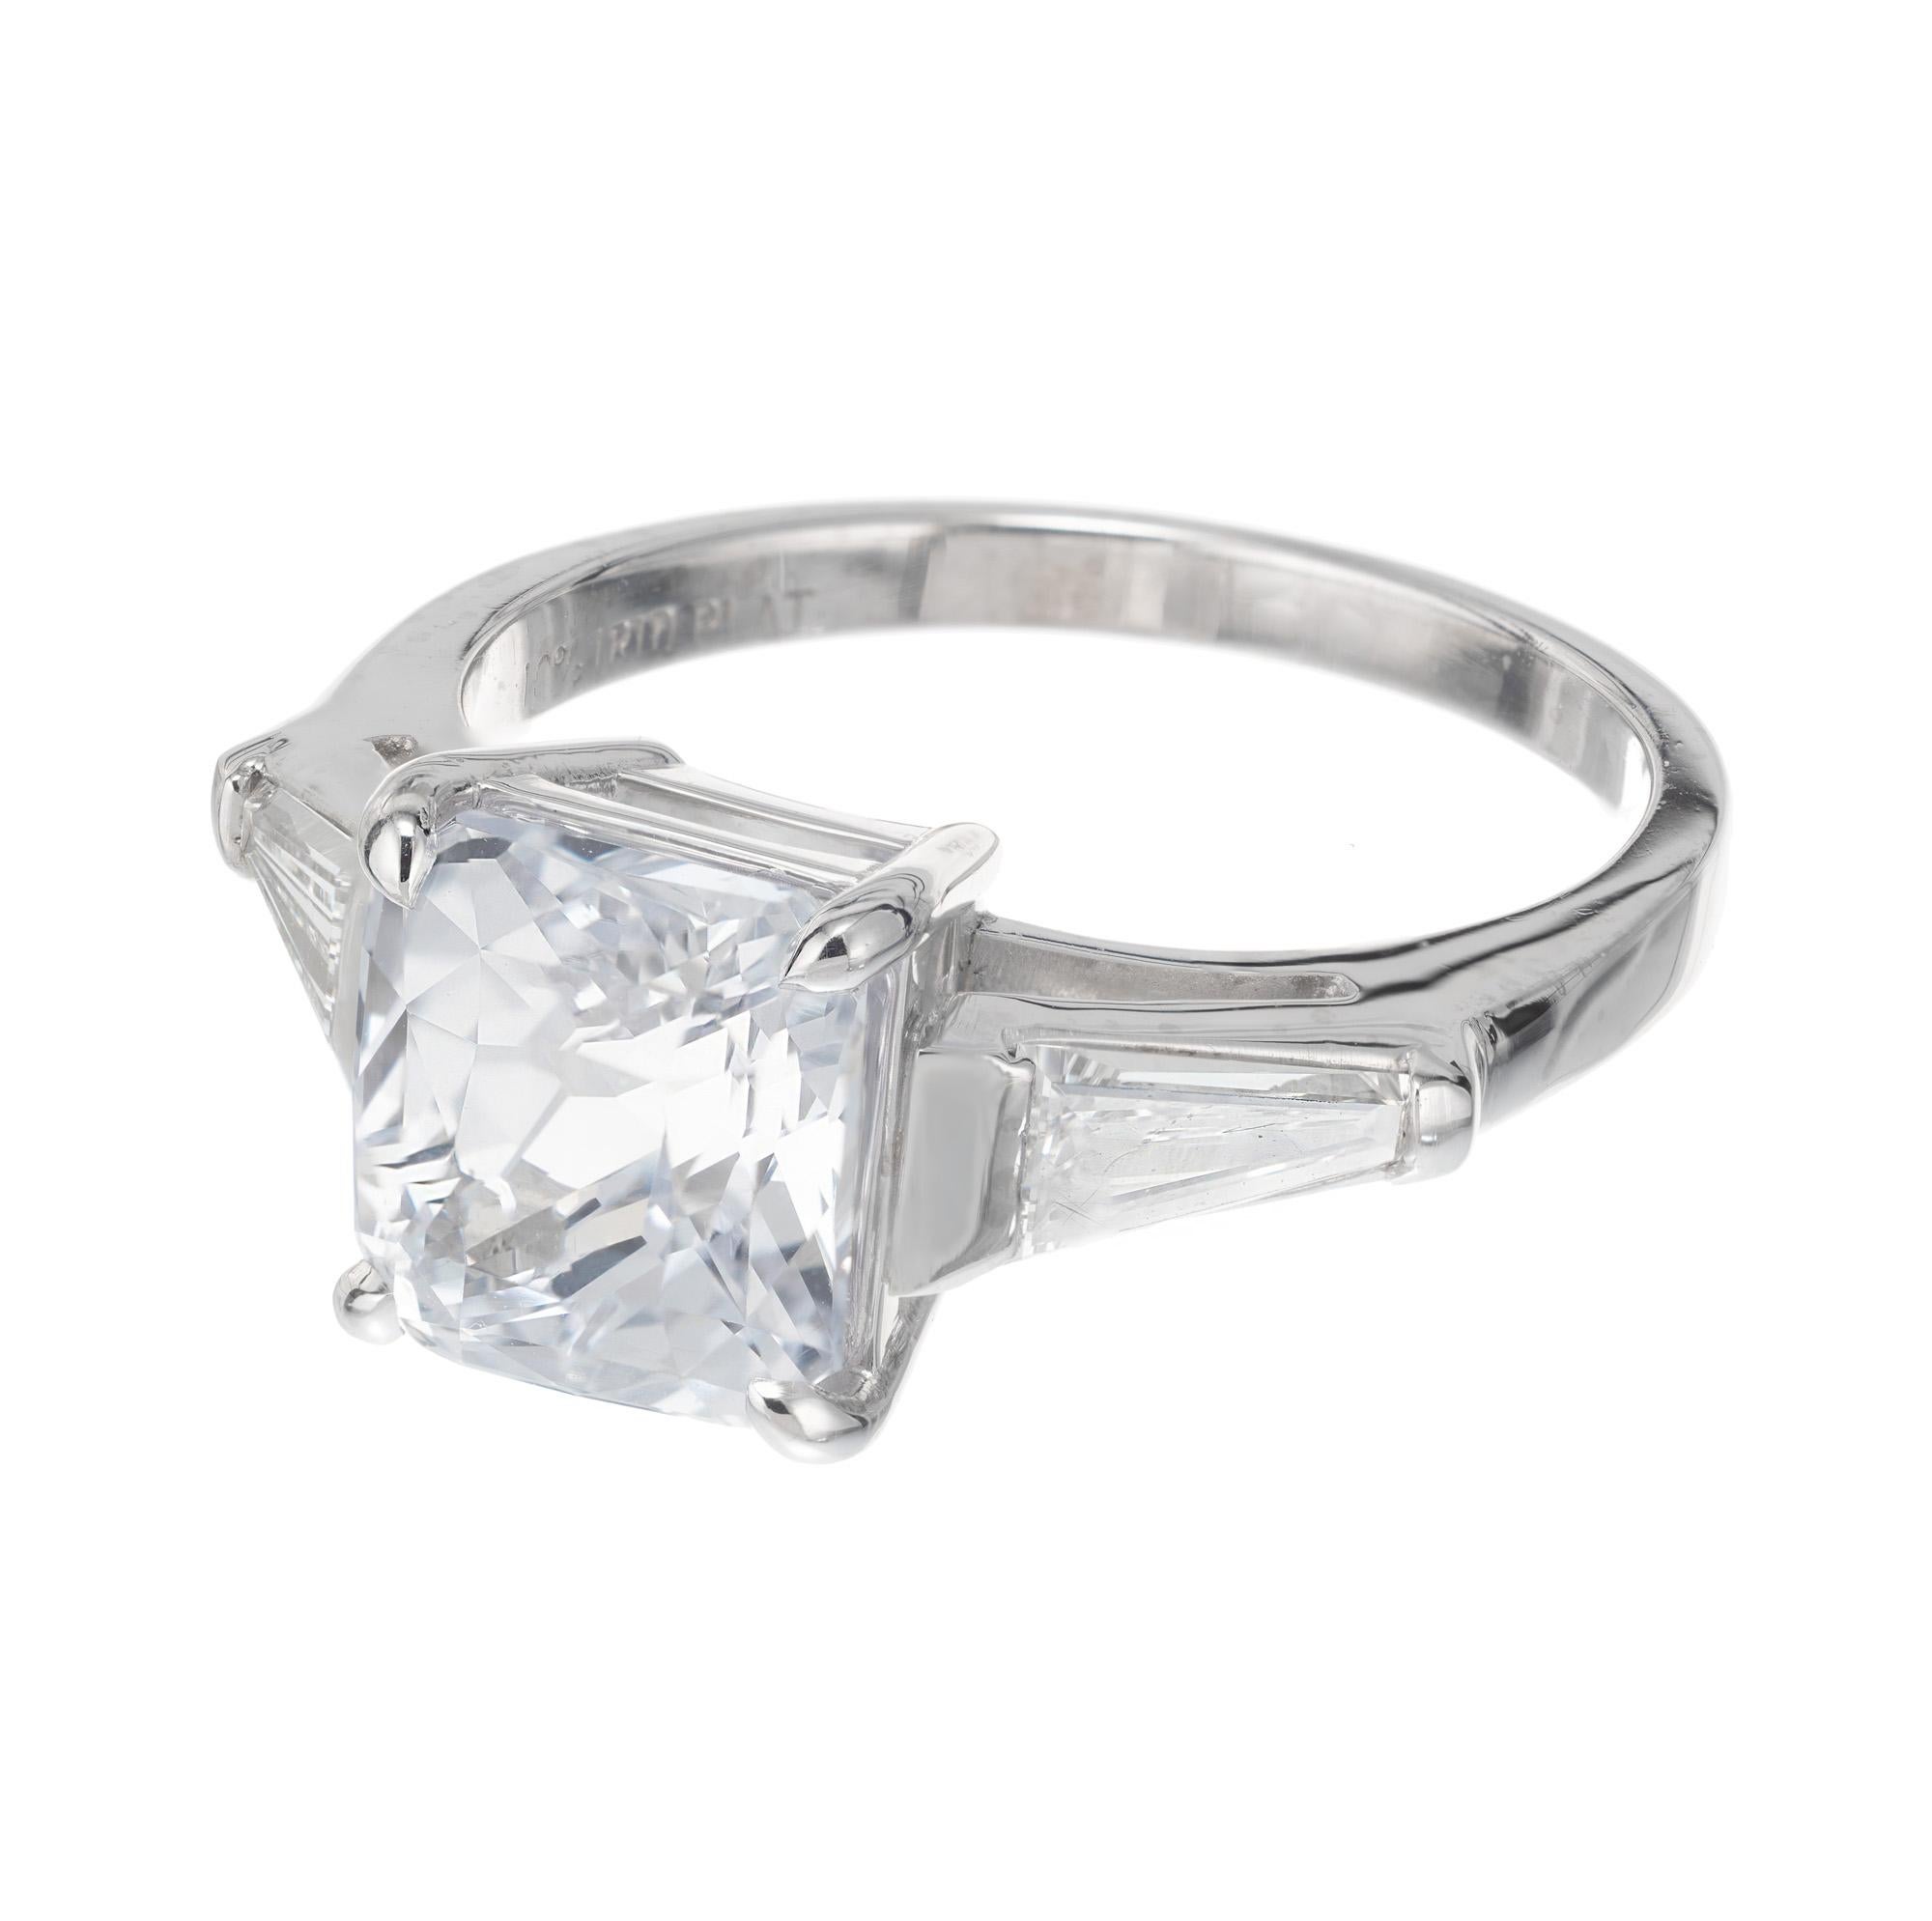 Baguette Cut Peter Suchy GIA Certified 3.47 Carat Sapphire Diamond Platinum Engagement Ring